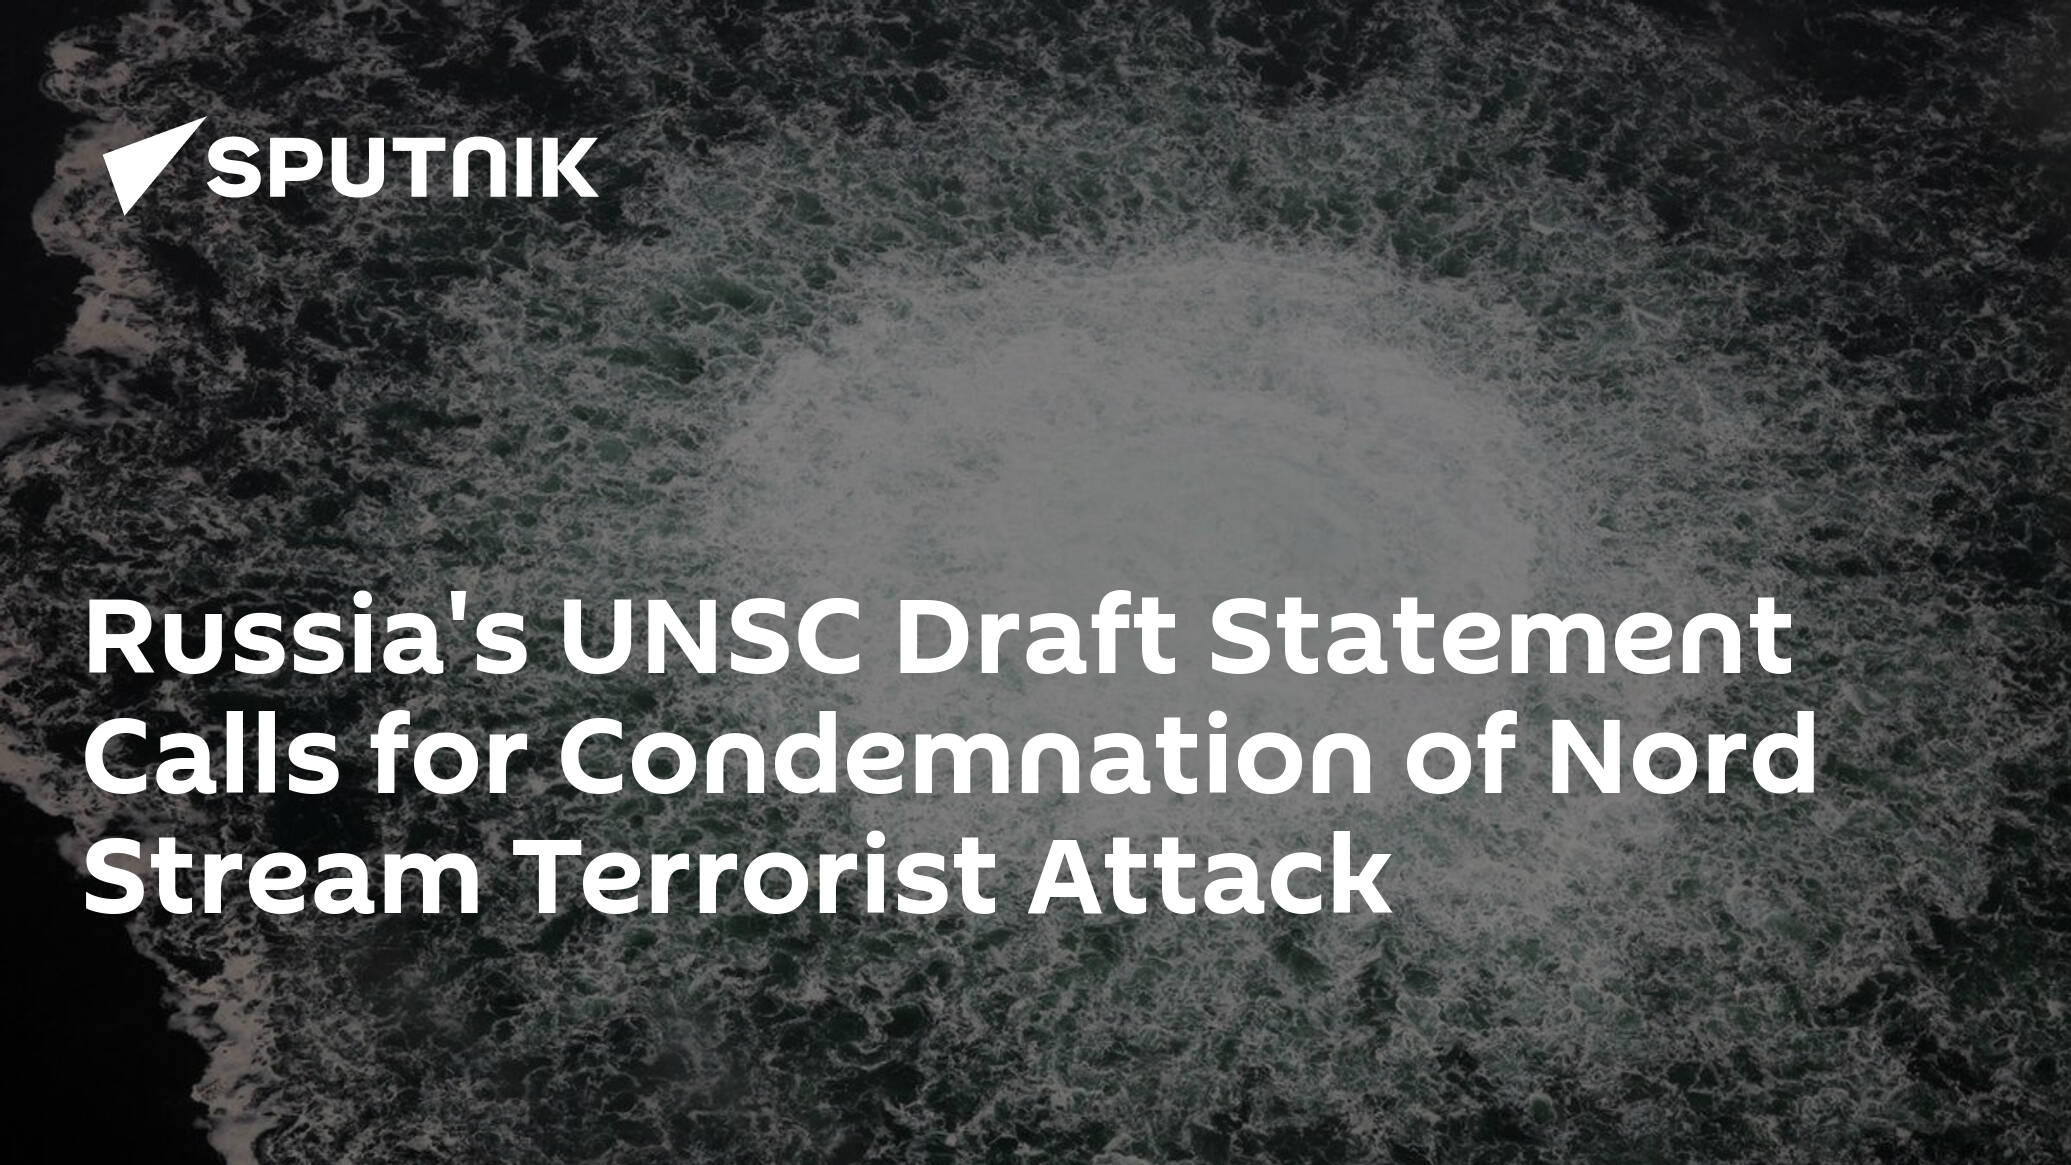 Russia's UNSC Draft Statement Calls for Condemnation of Nord Stream Terrorist Attack